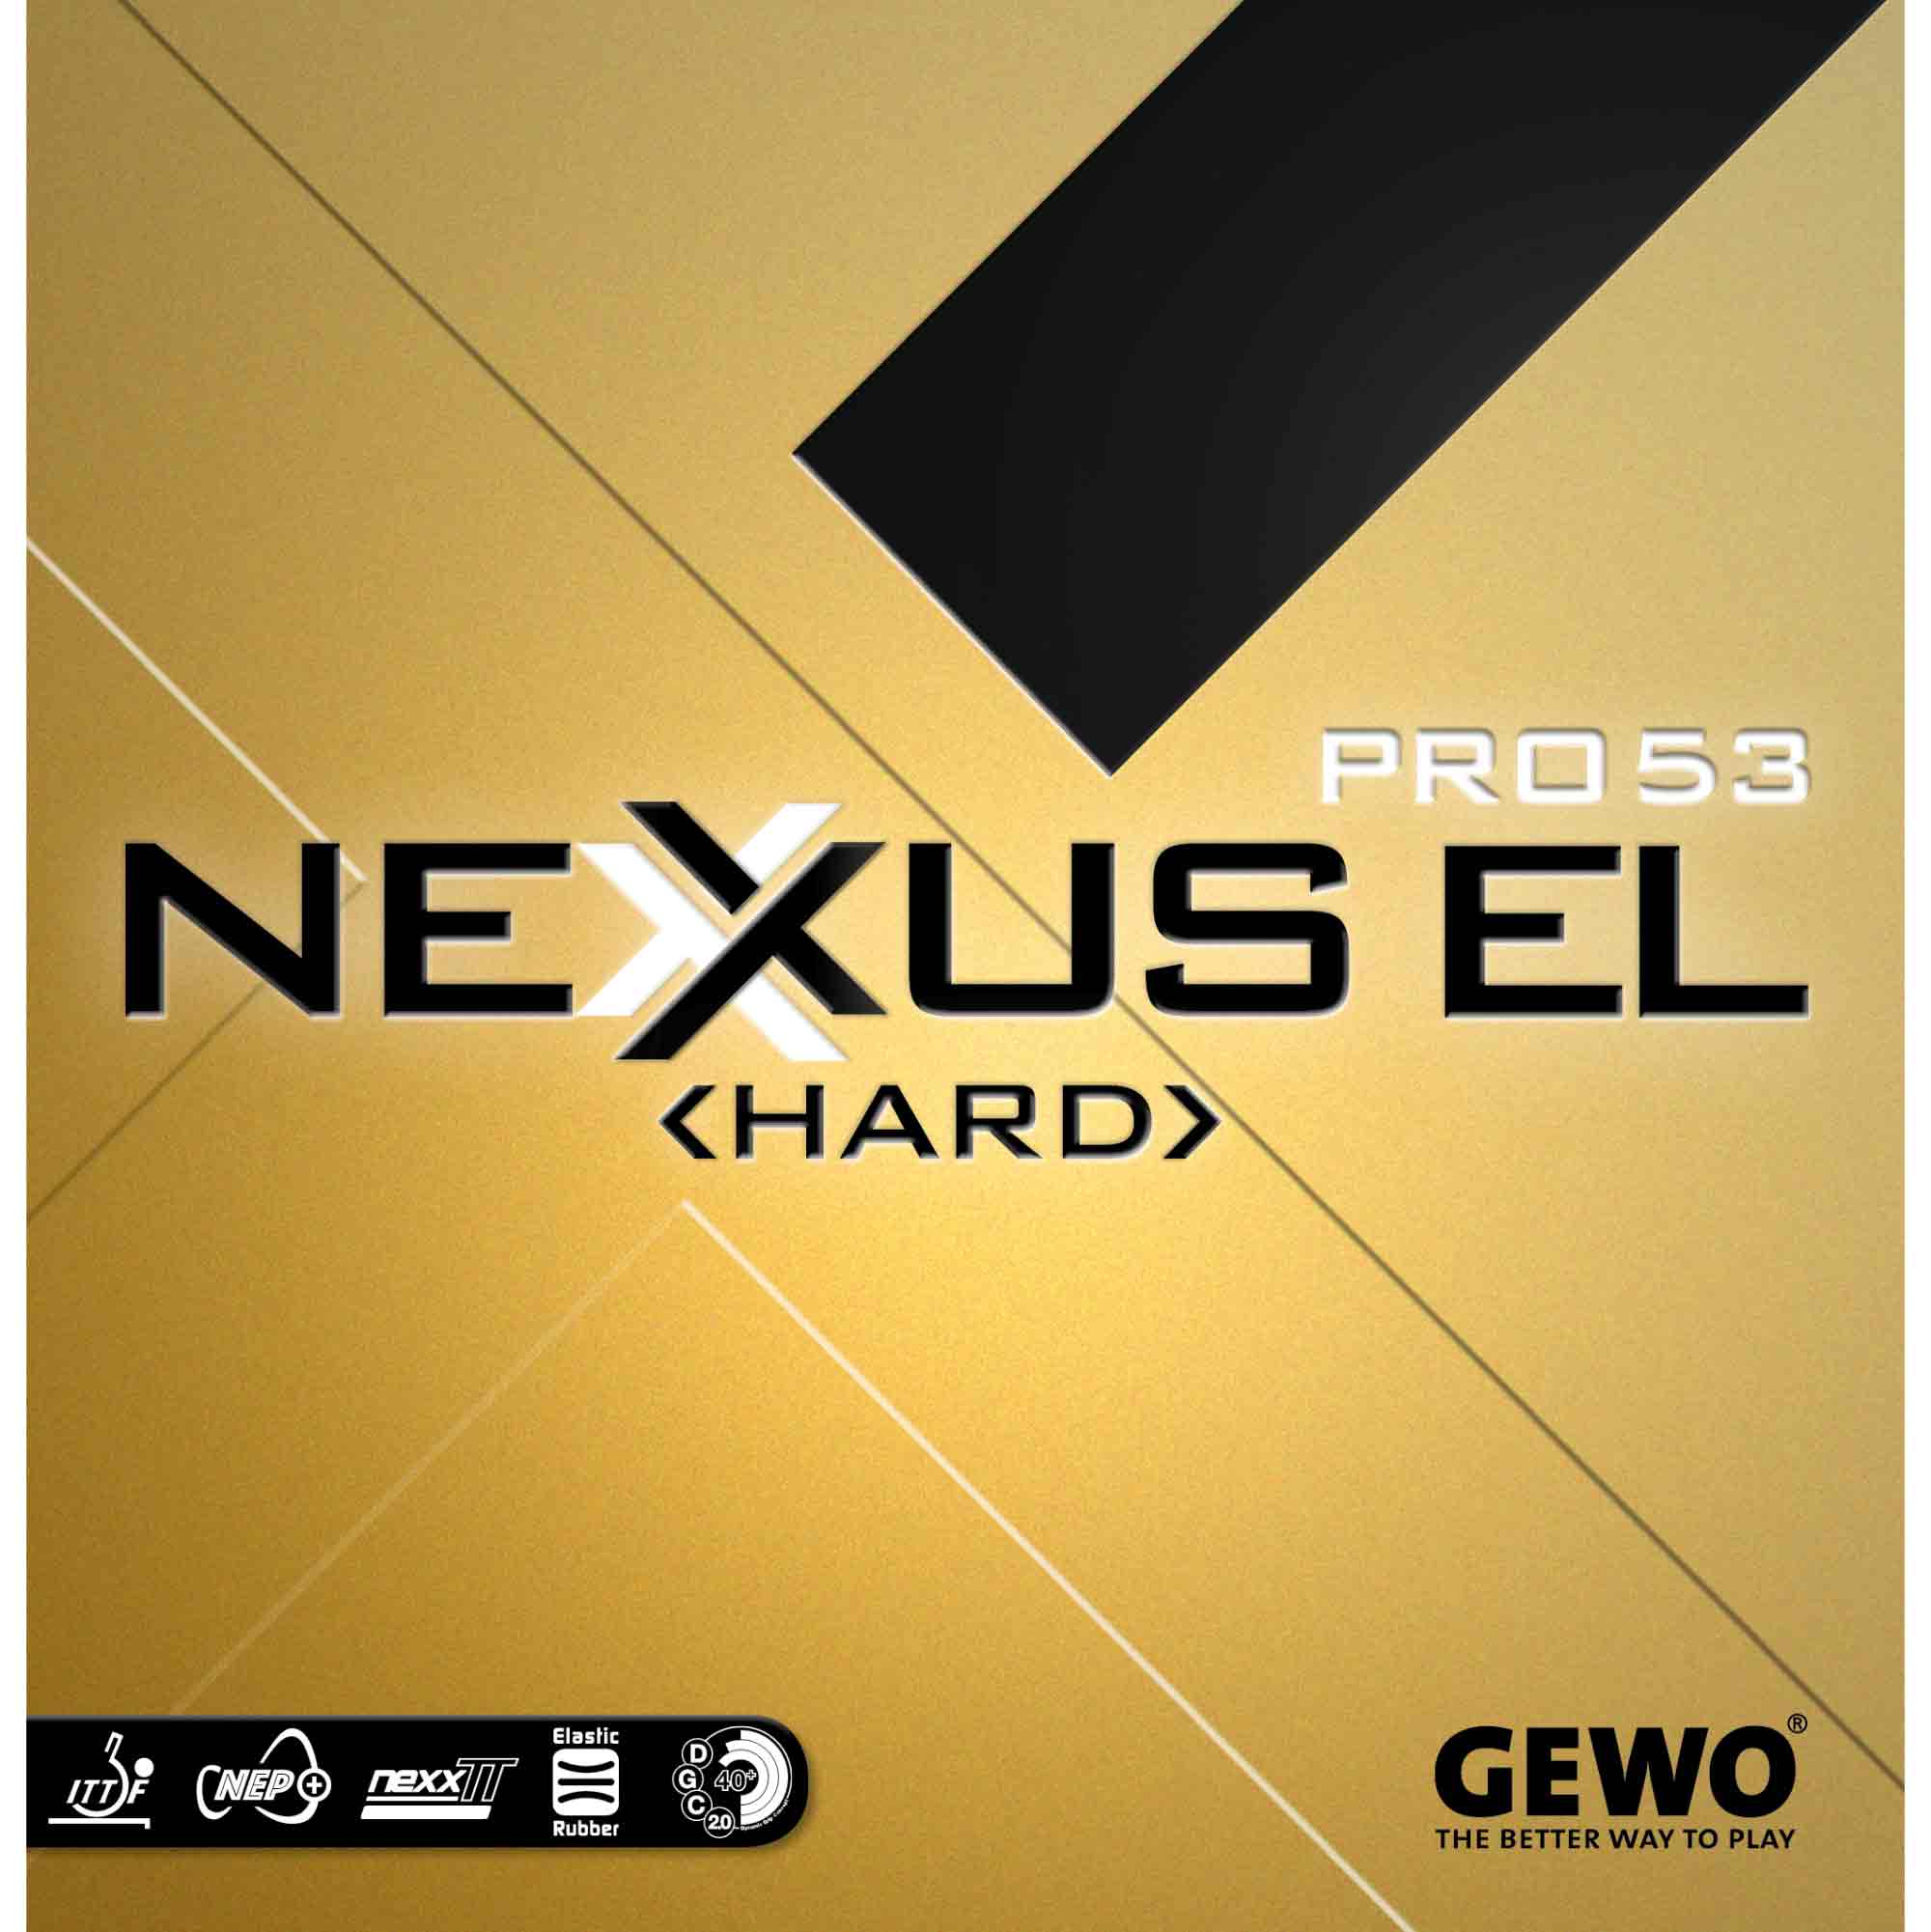 GEWO Rubber Nexxus EL Pro 53 Hard